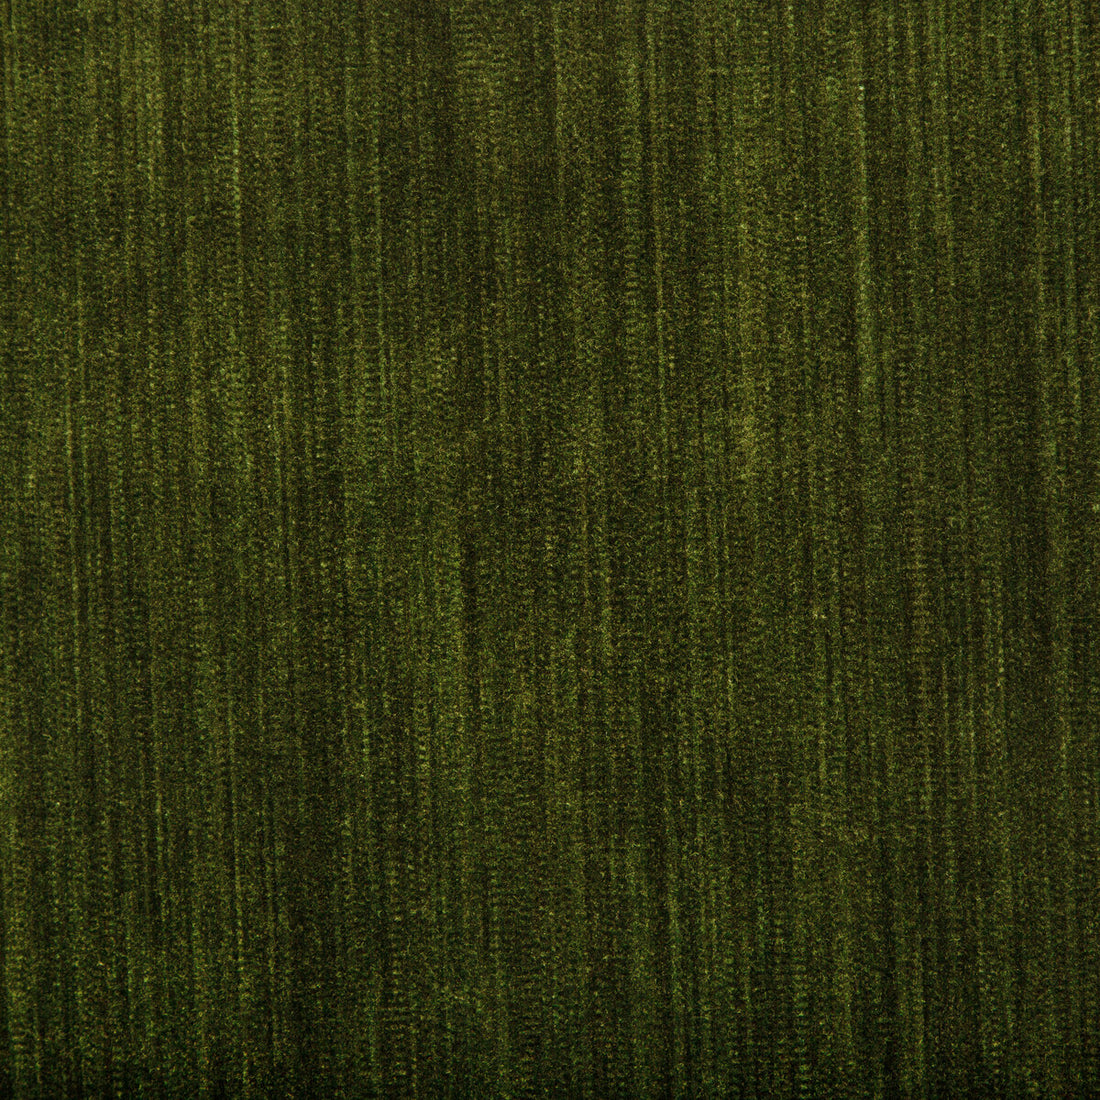 Barnwell Velvet fabric in aloe color - pattern 2020180.3.0 - by Lee Jofa in the Barnwell Velvet collection